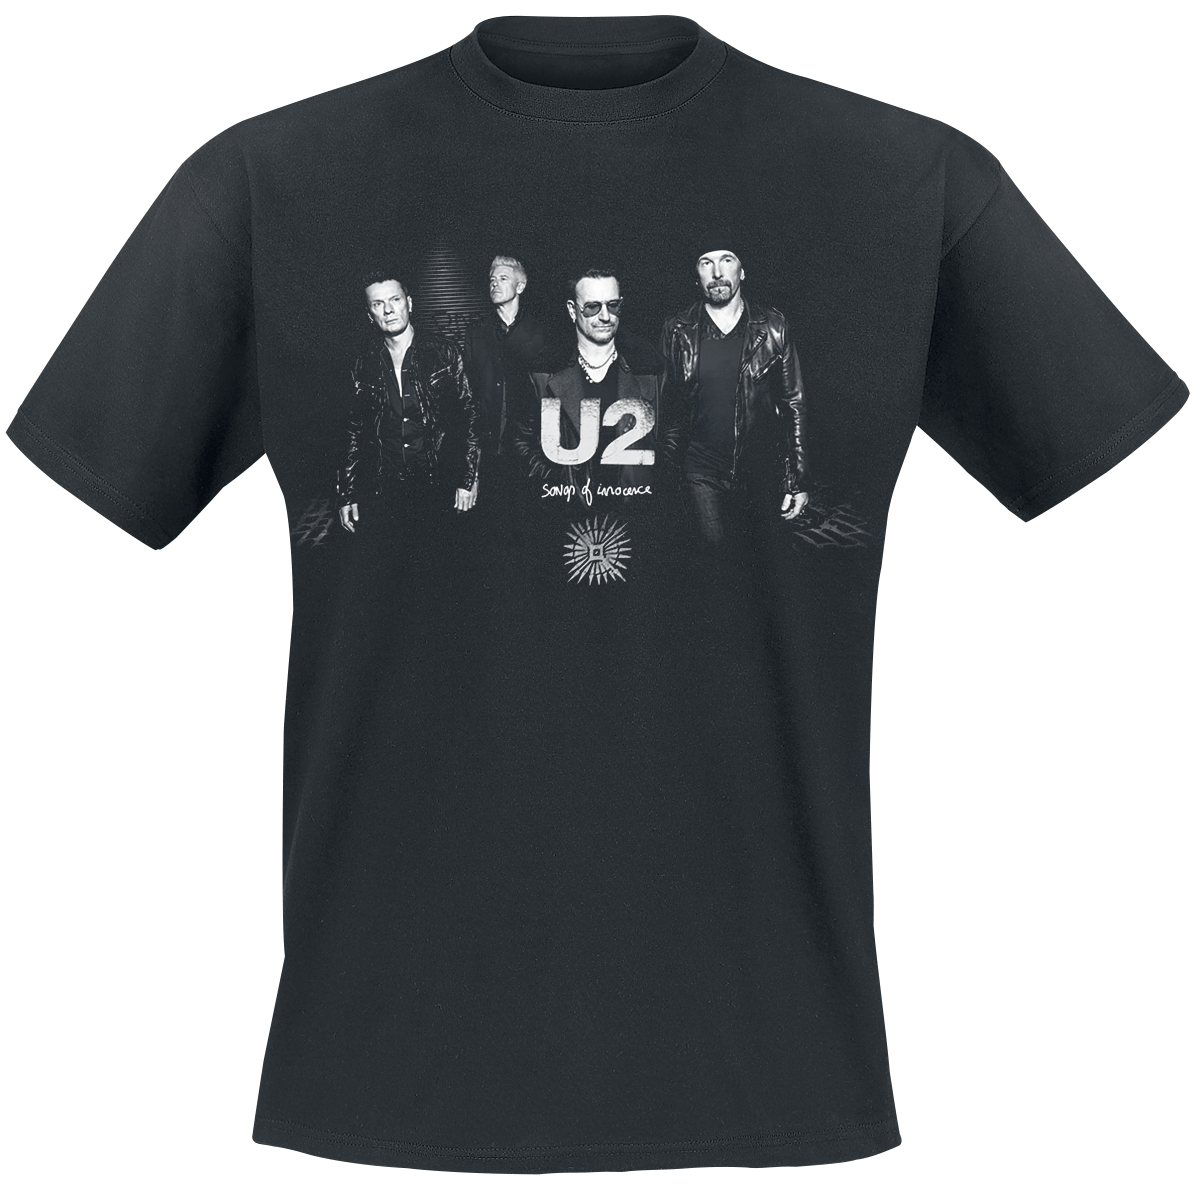 U2 - Songs Of Innocence Photo - T-Shirt - black image